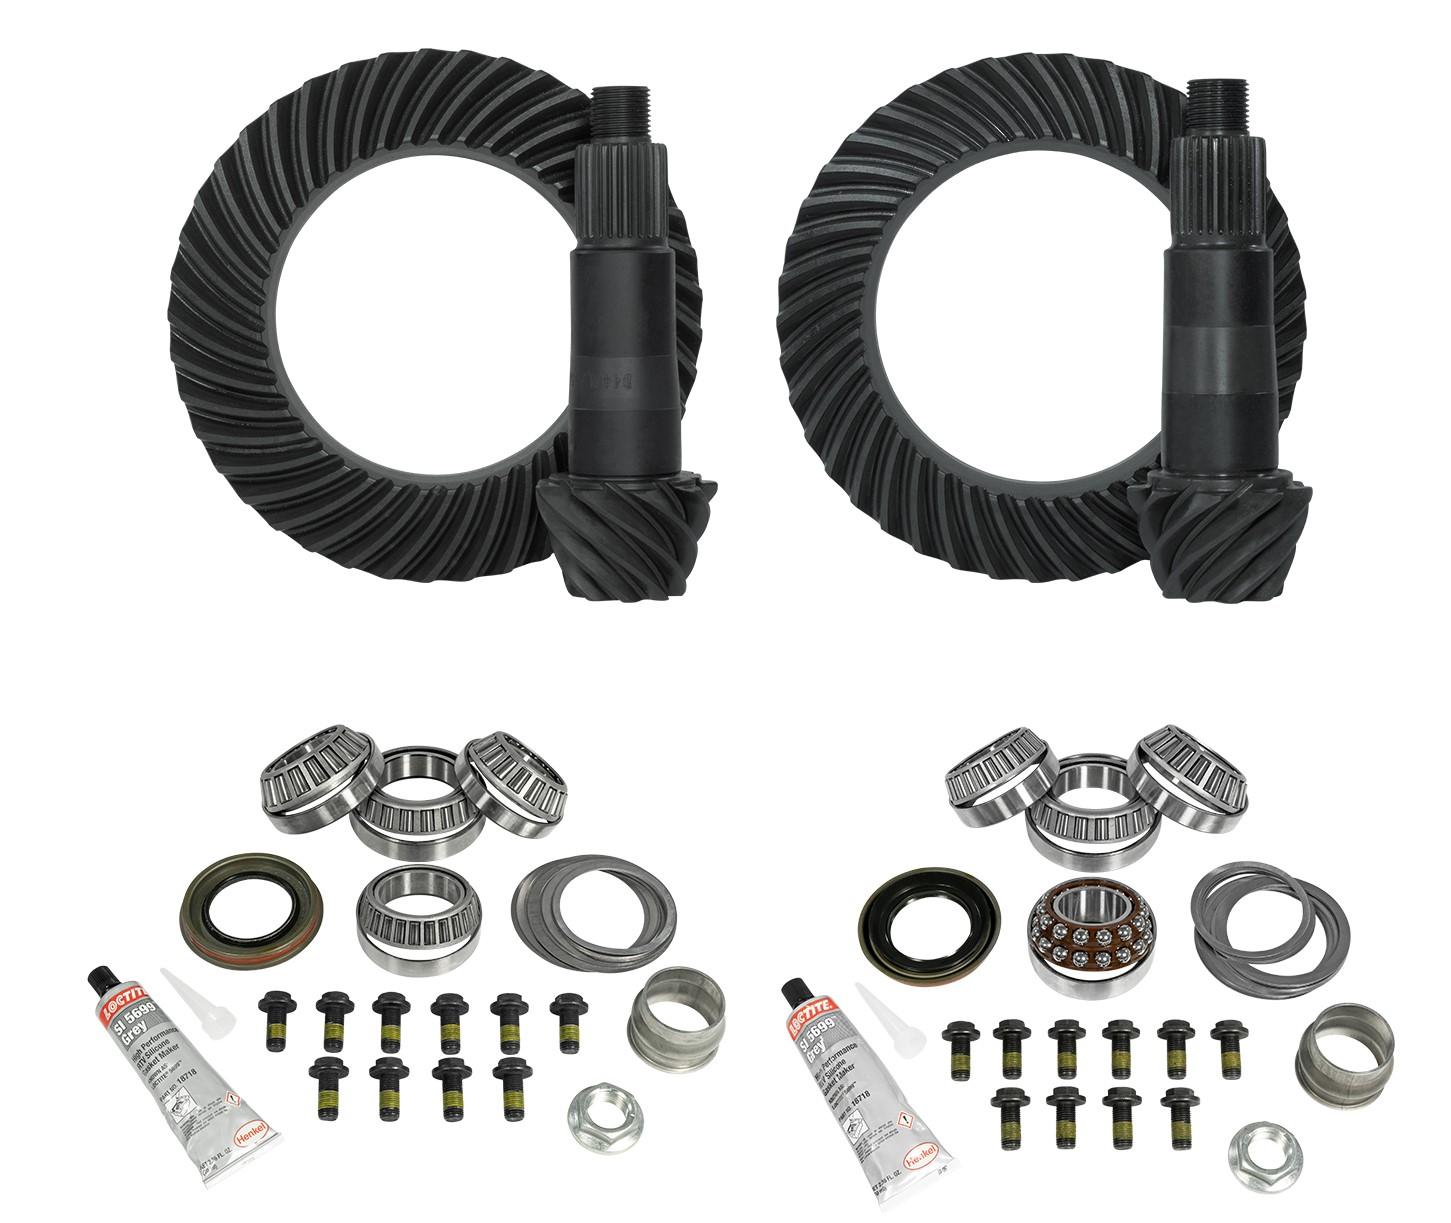 Introducing Yukon Gear & Axle Toyota Re-Gear Kits